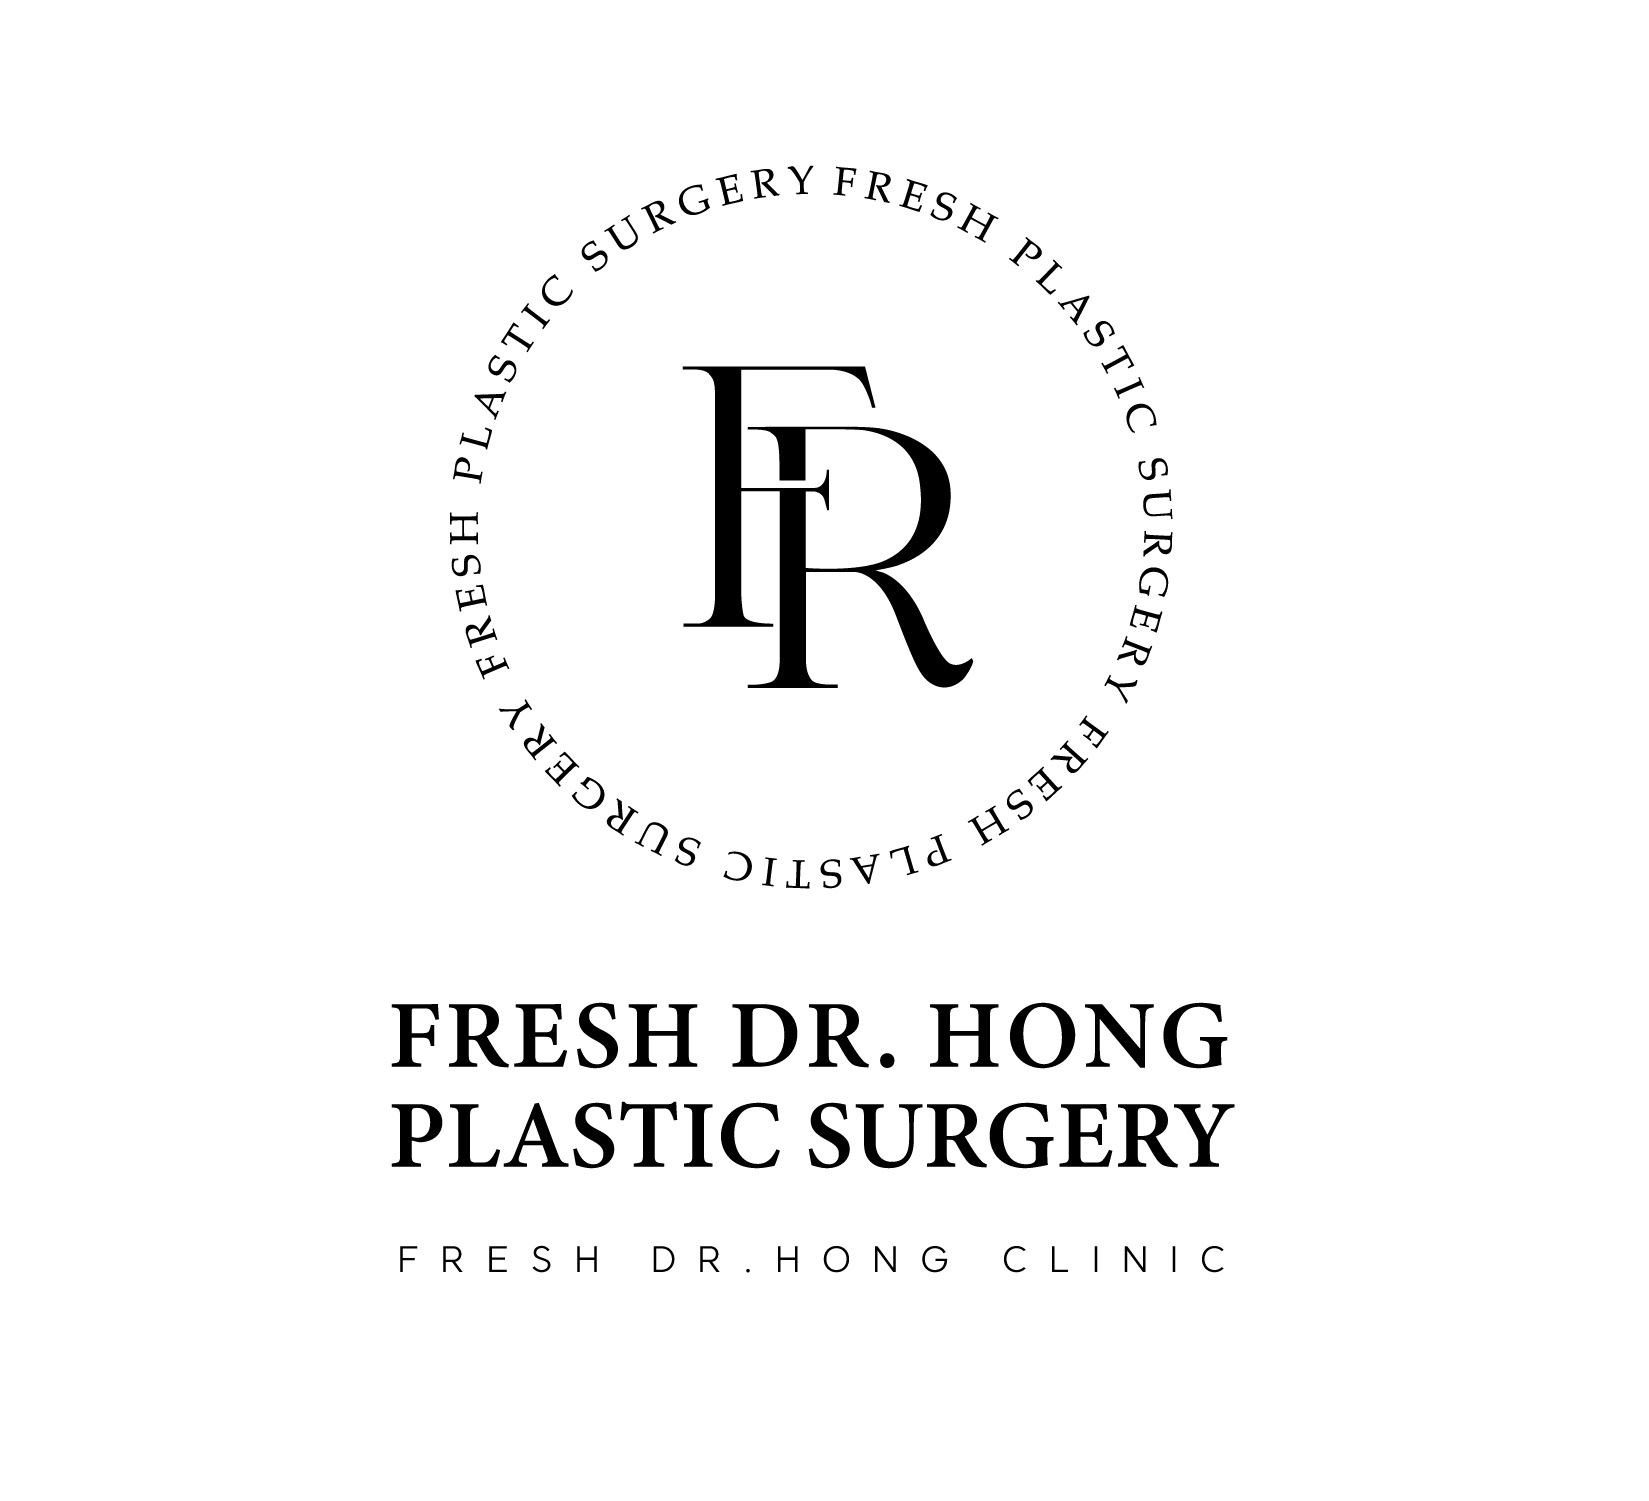 Fresh Dr.Hong Plastic Surgery logo FR and clinic name